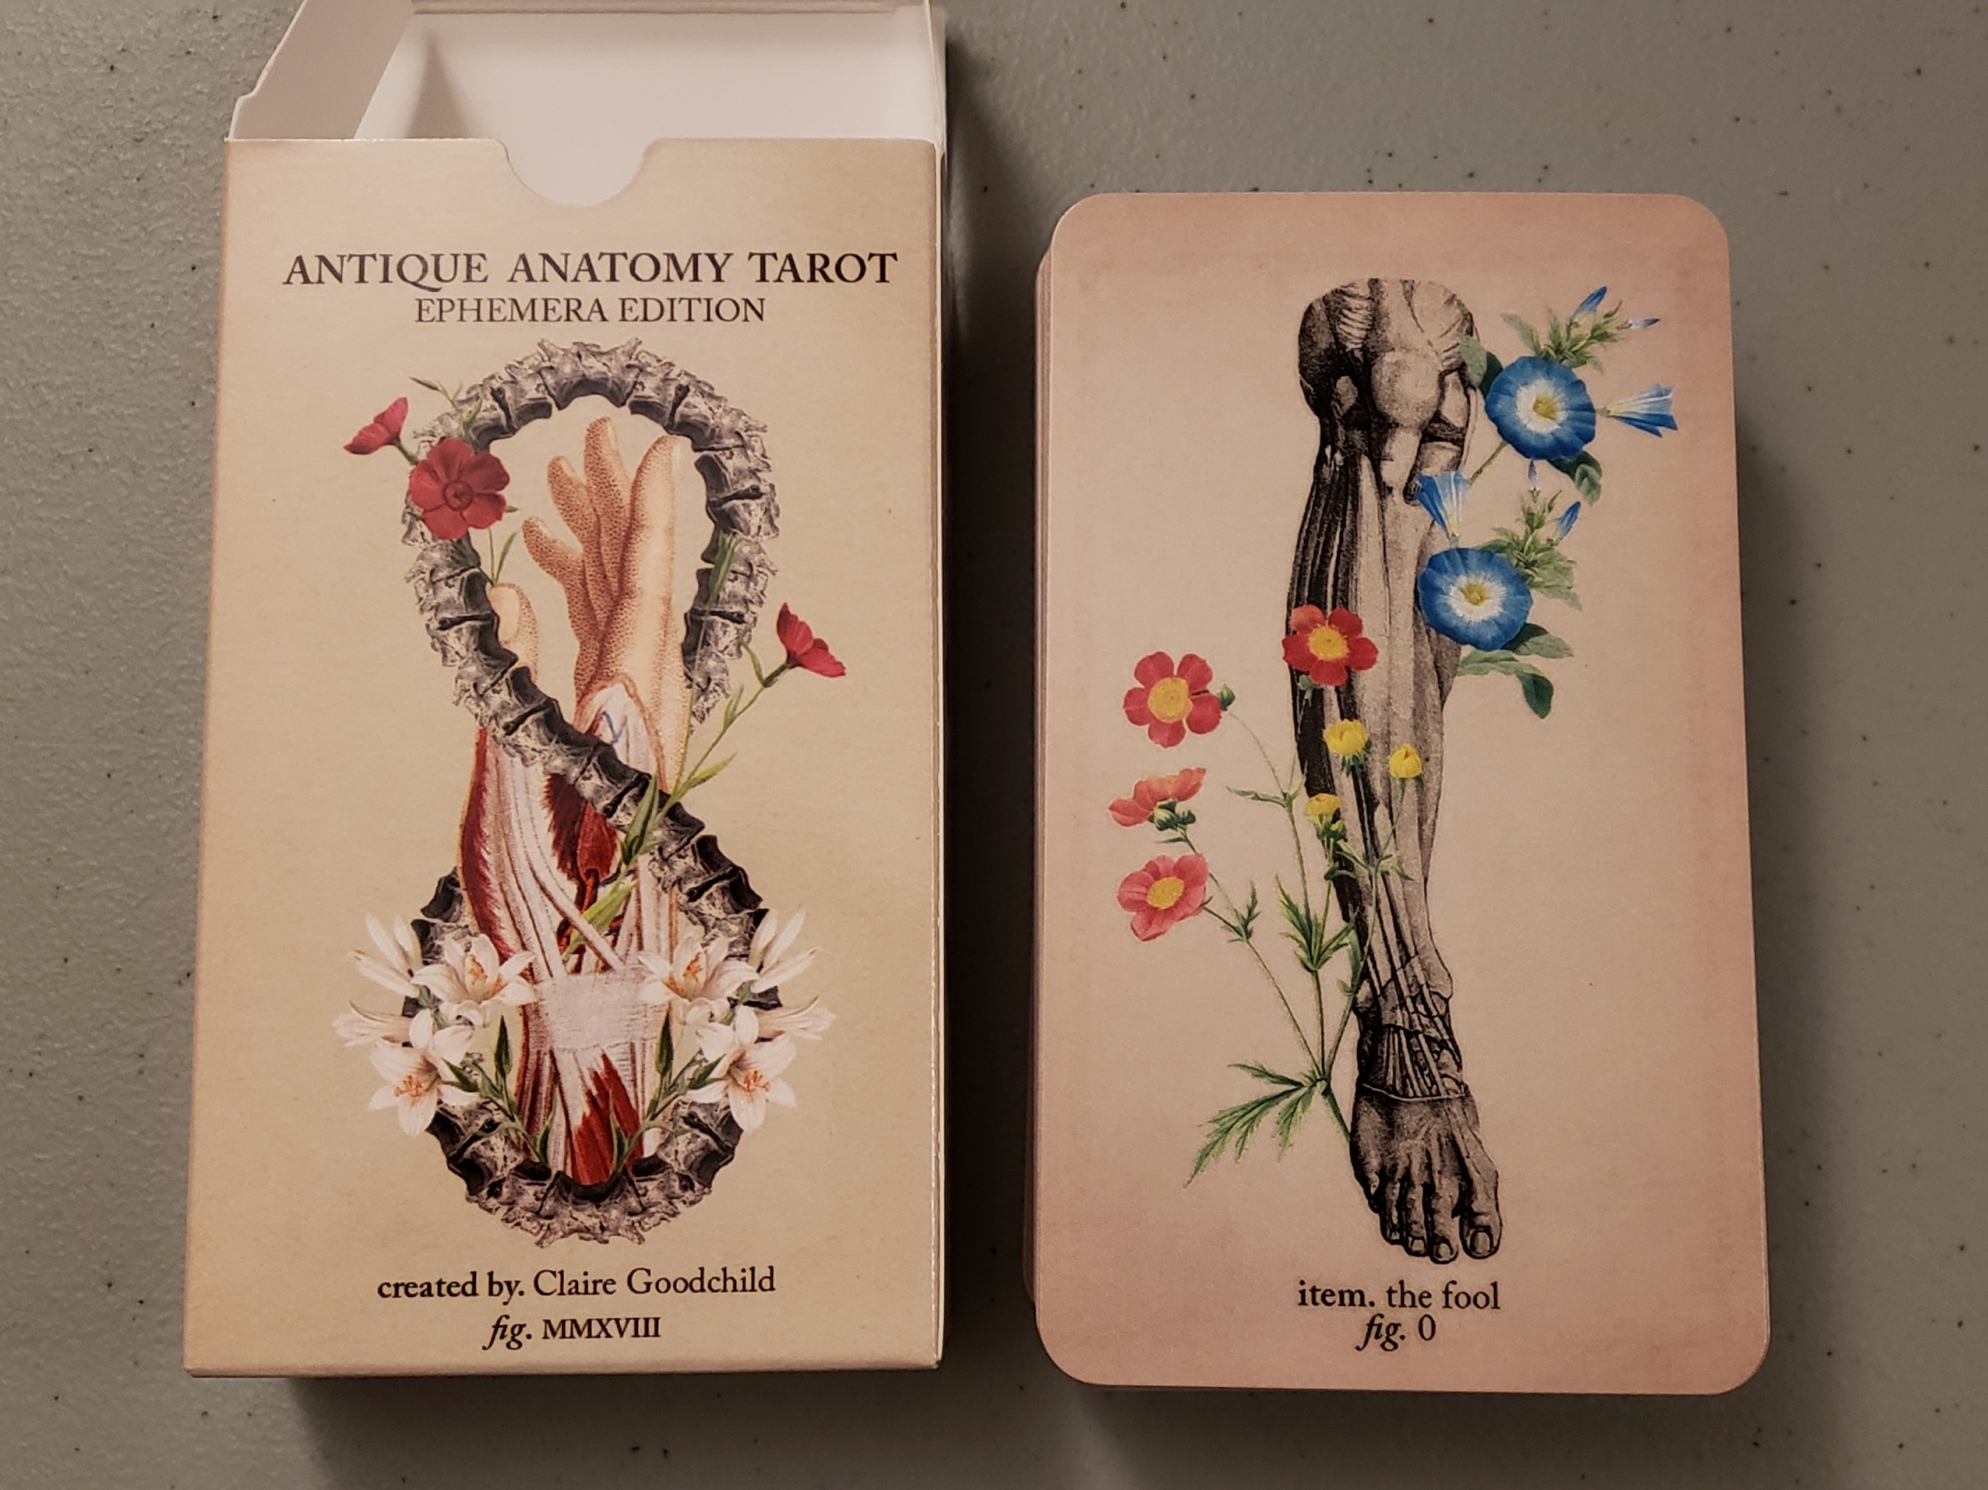 New Deck: Antique Anatomy Tarot - Ephemera Edition.